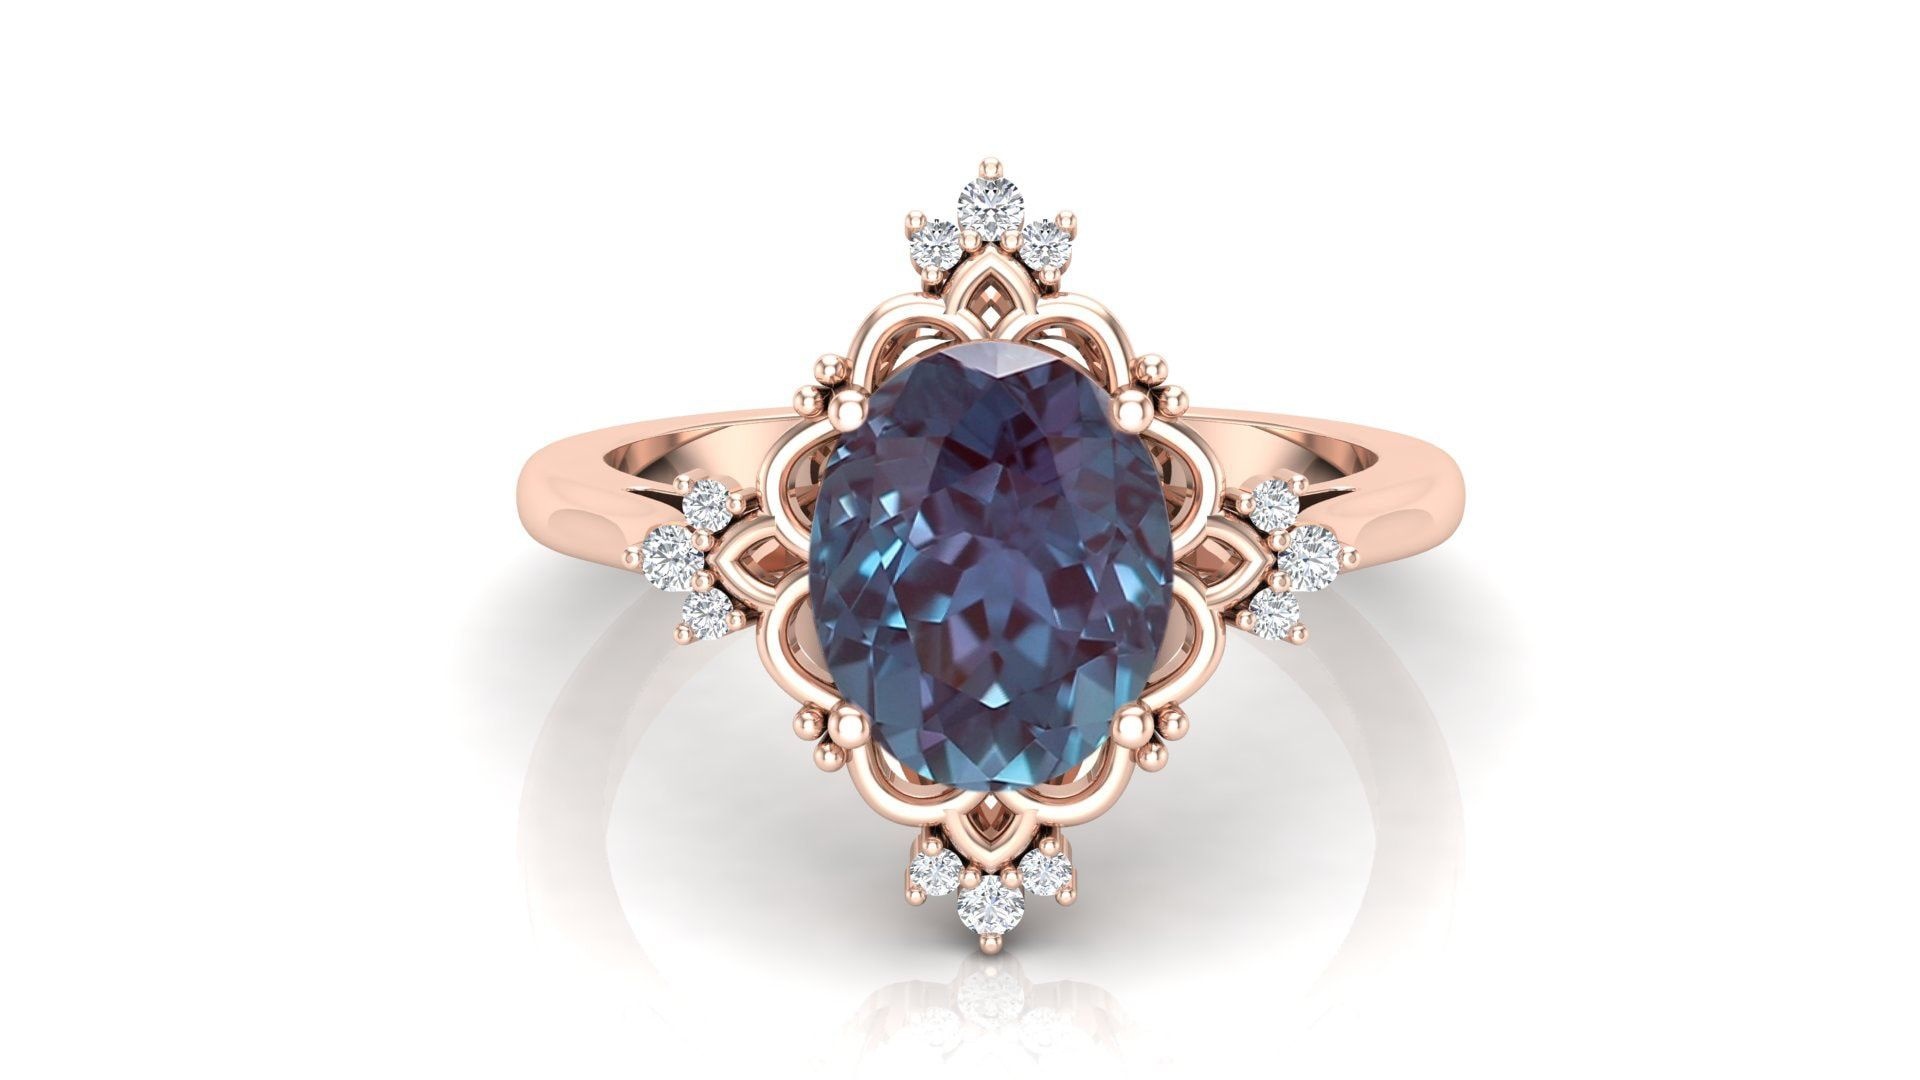 Alexandrite engagement ring, Vintage art deco design, Sterling silver ring, Gemstone jewelry, 1920x1080 Full HD Desktop